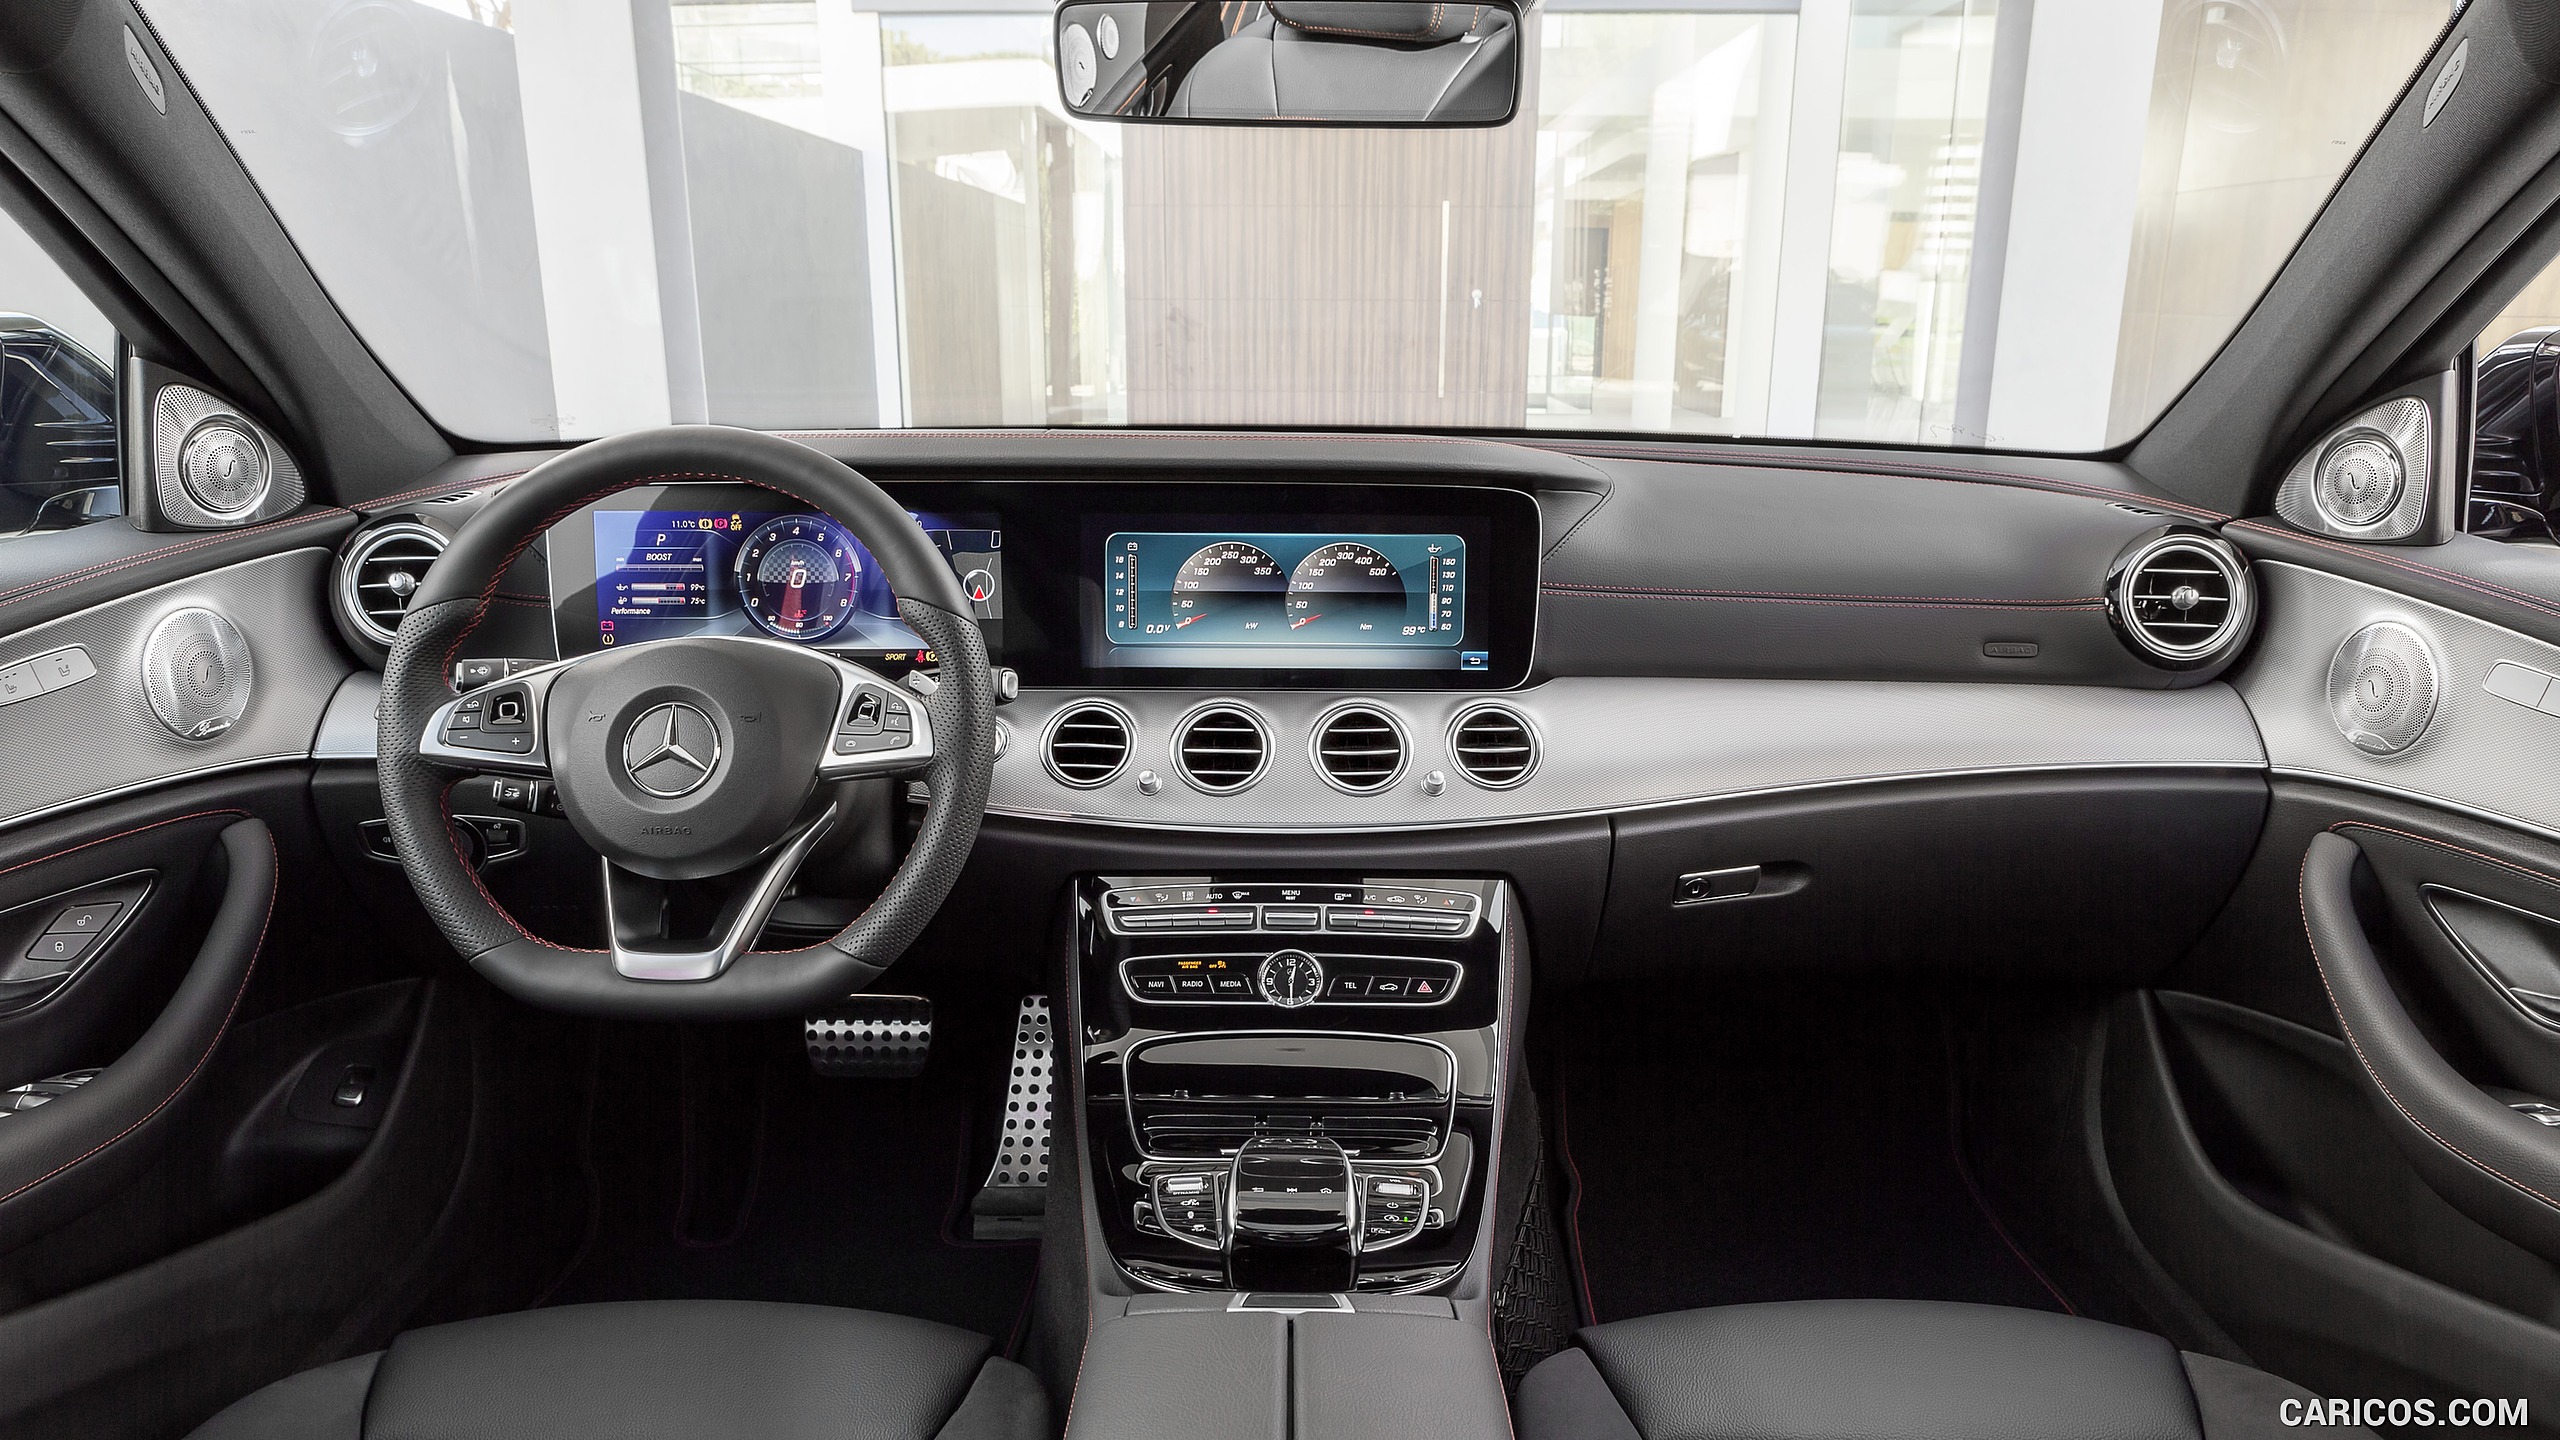 2017 Mercedes-AMG E 43 4MATIC - Leather Black Interior, Cockpit, #13 of 71